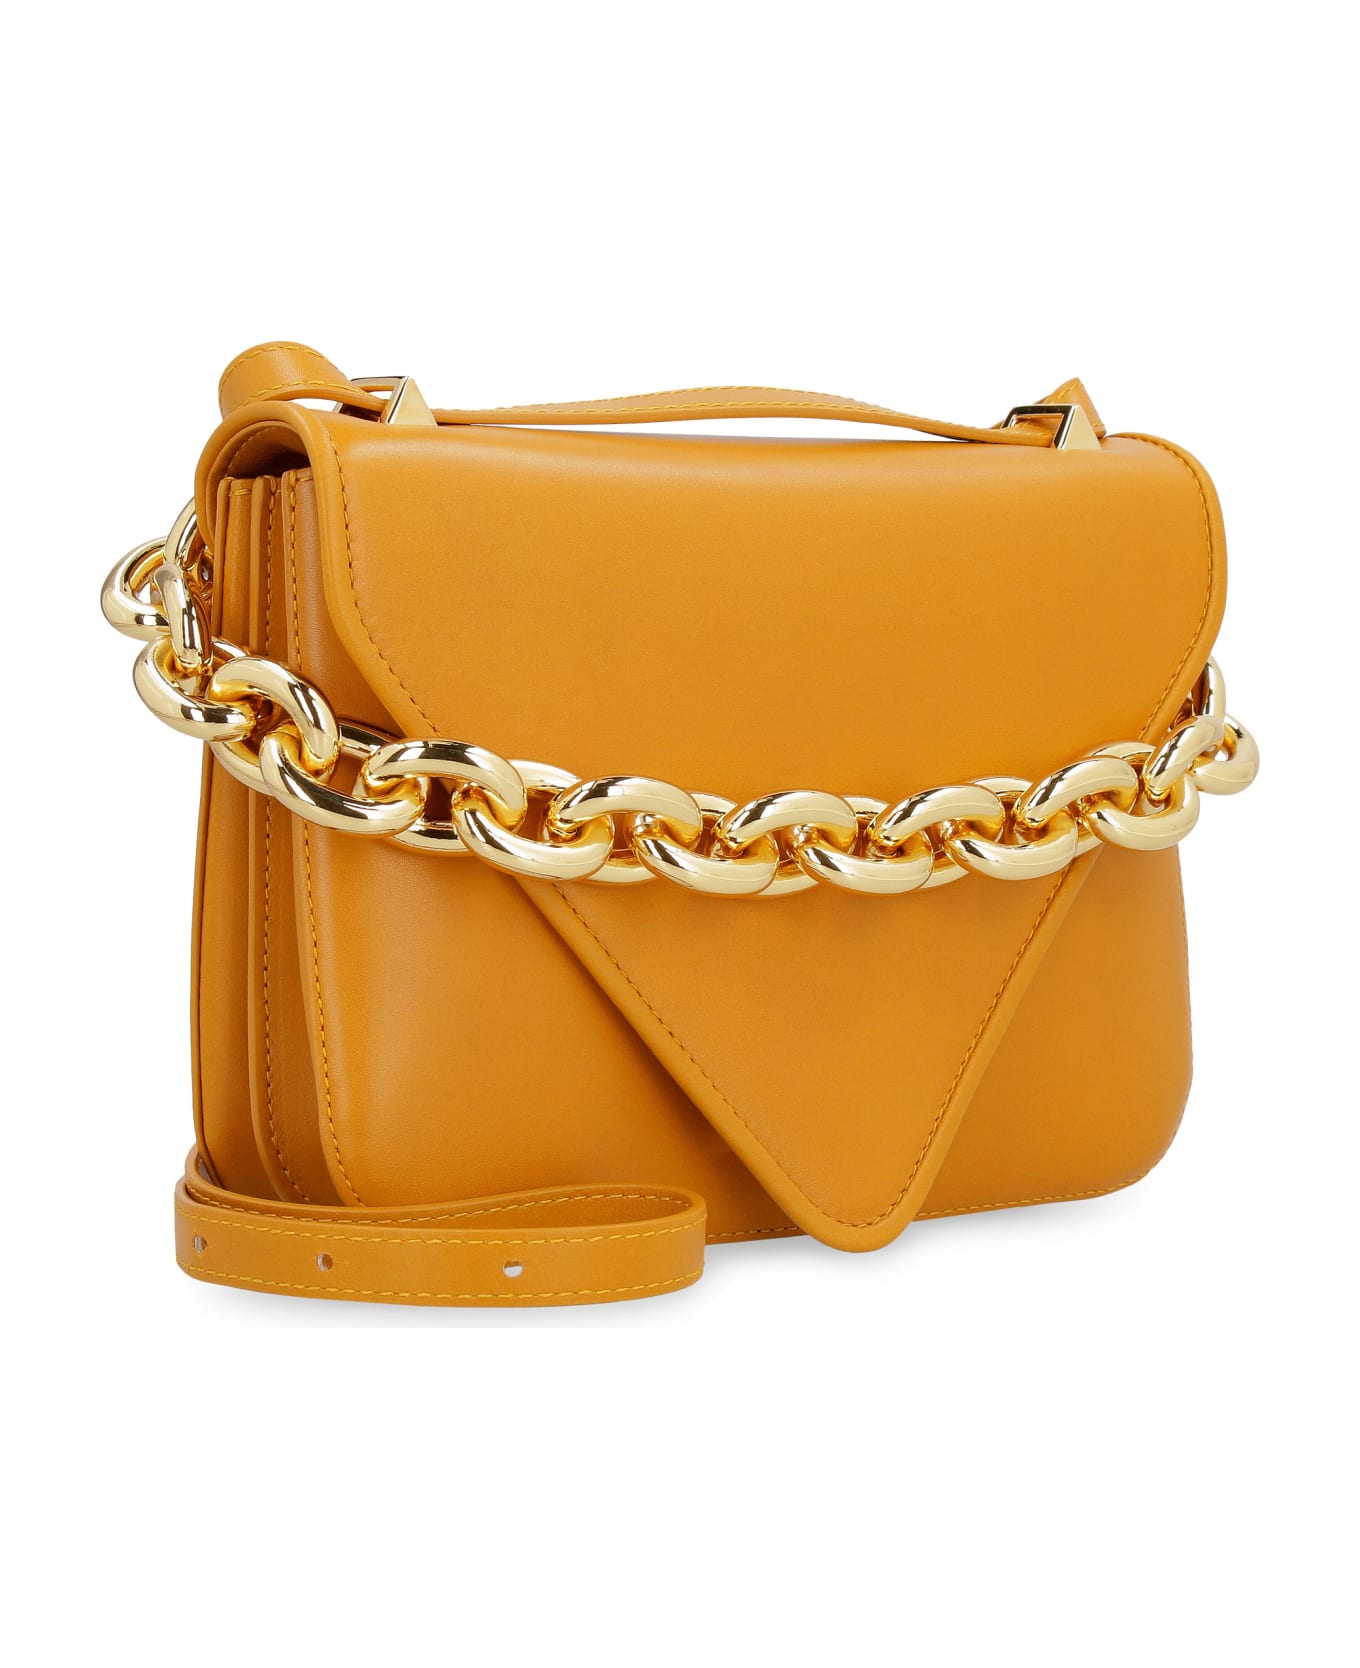 Bottega Veneta Mount Leather Envelope Bag - Mustard ショルダーバッグ